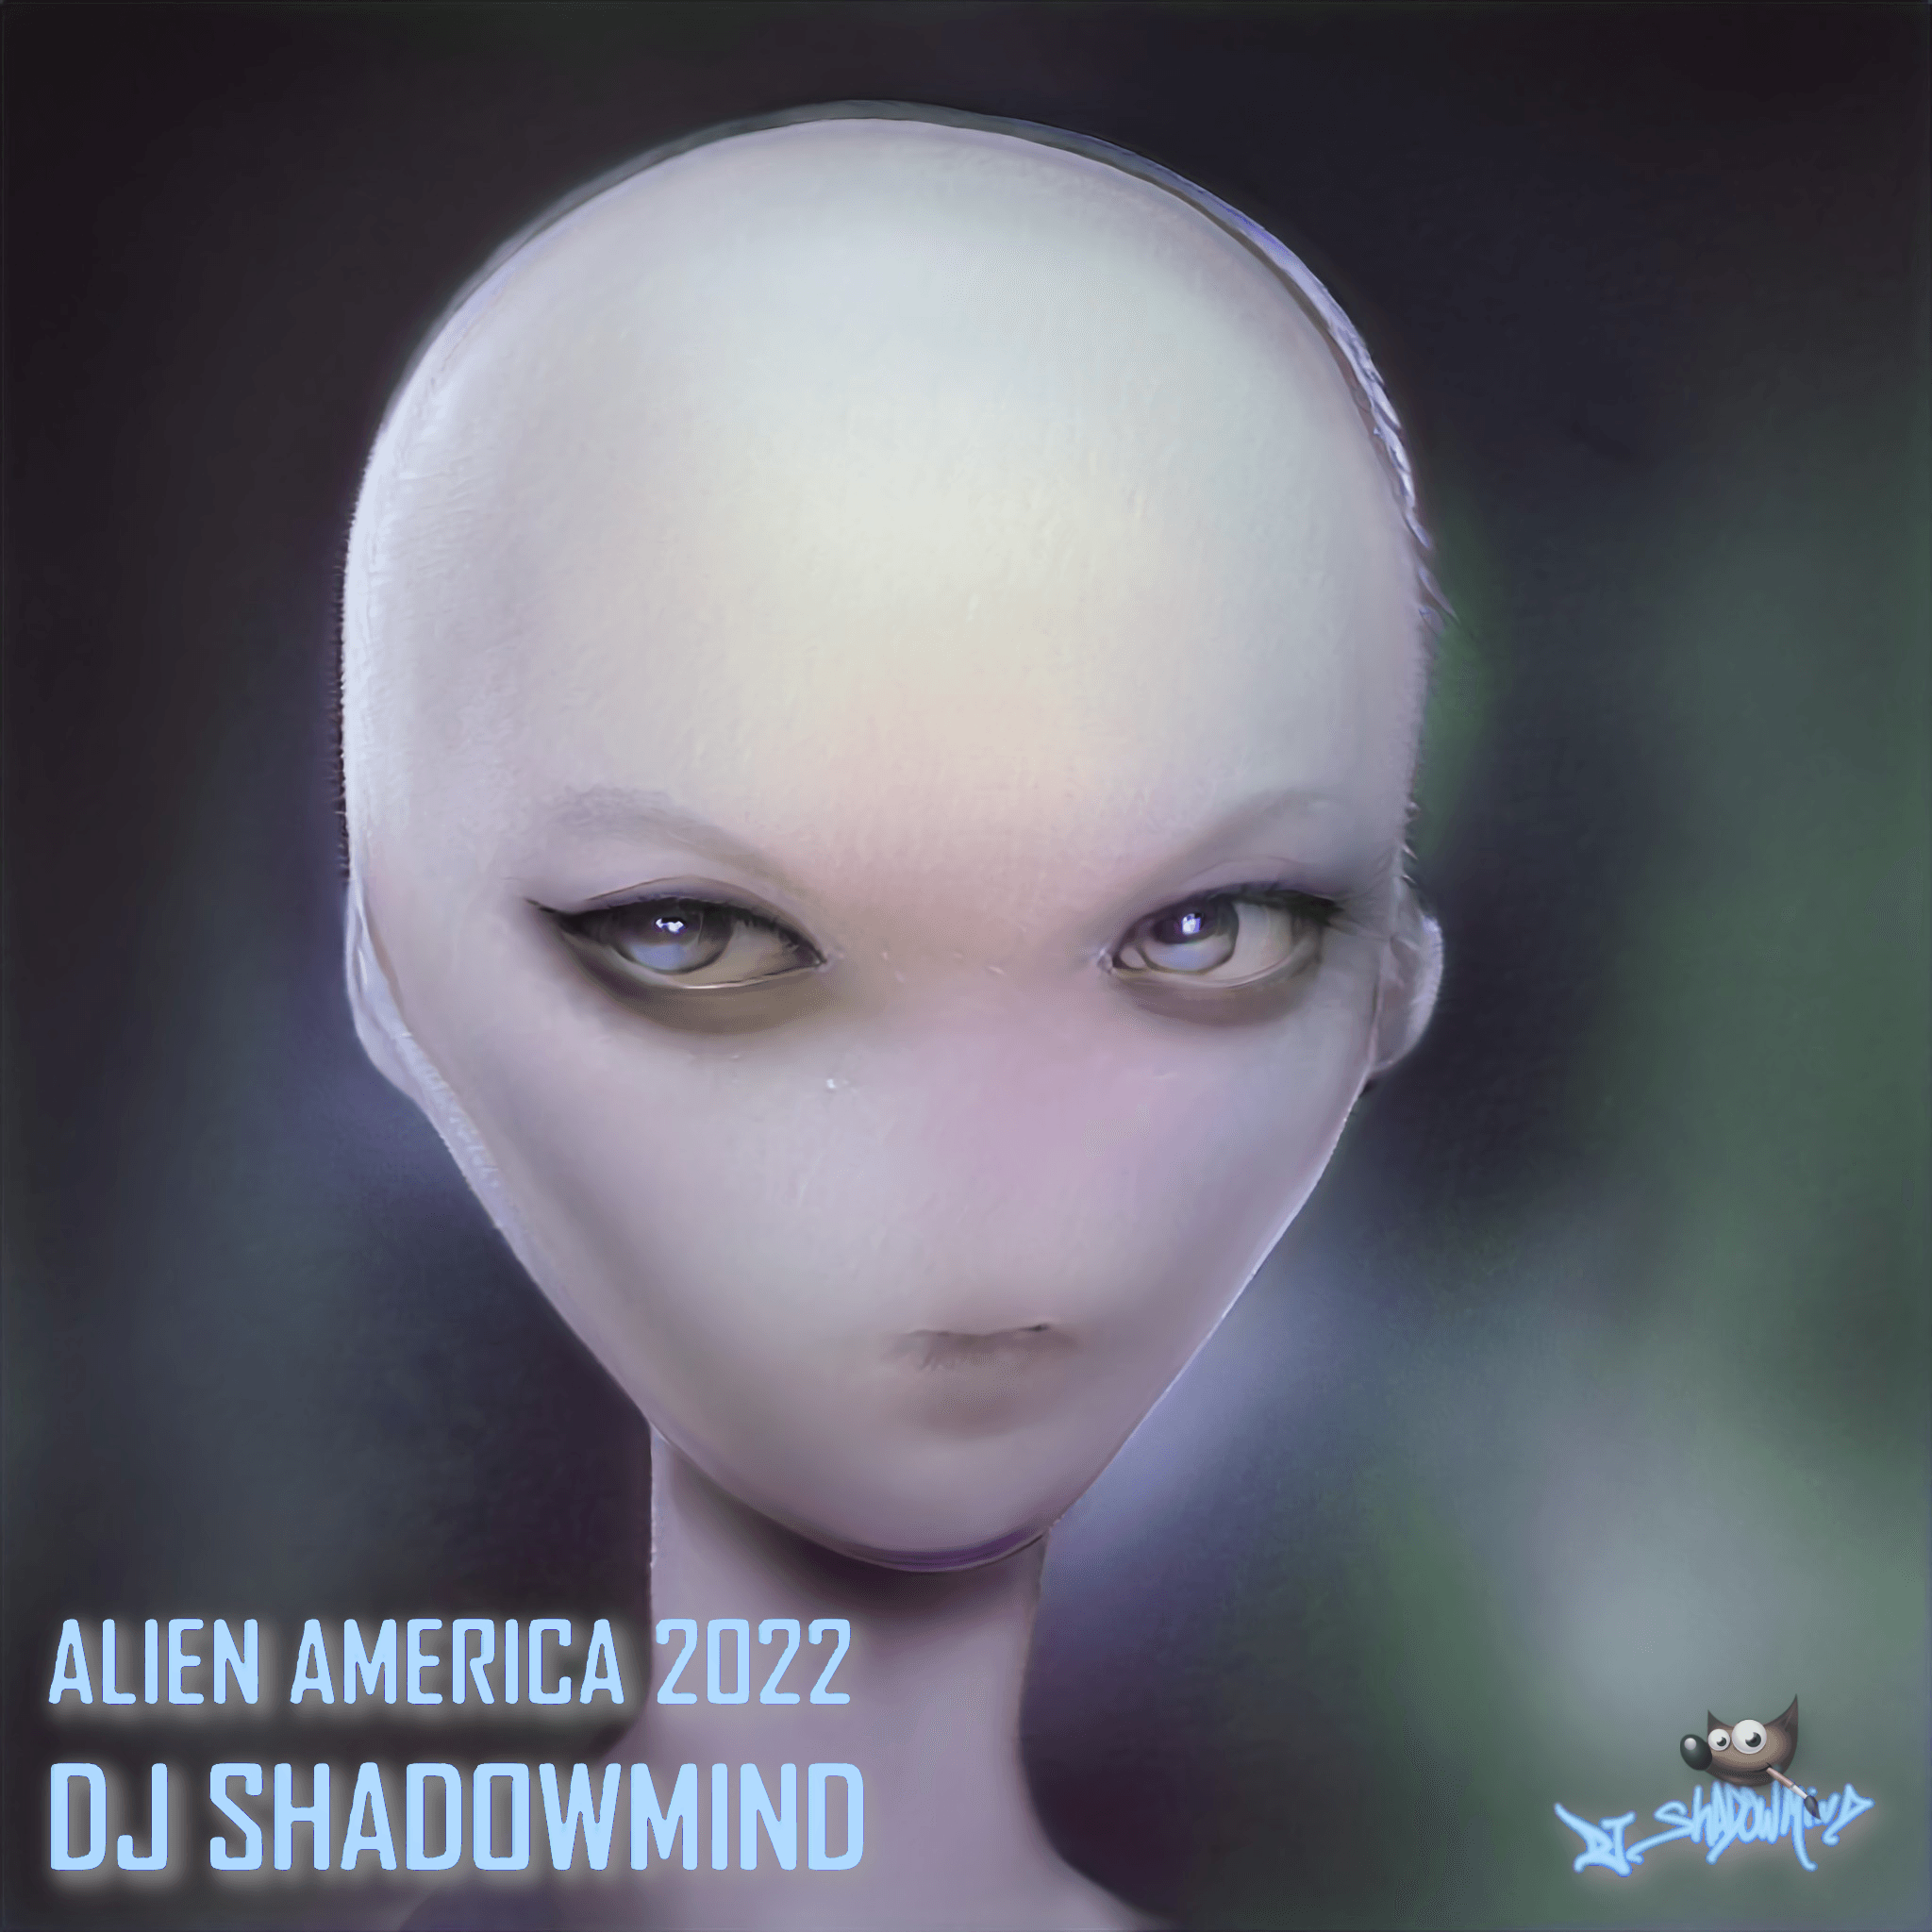 Alien America 2022 - Agent 175